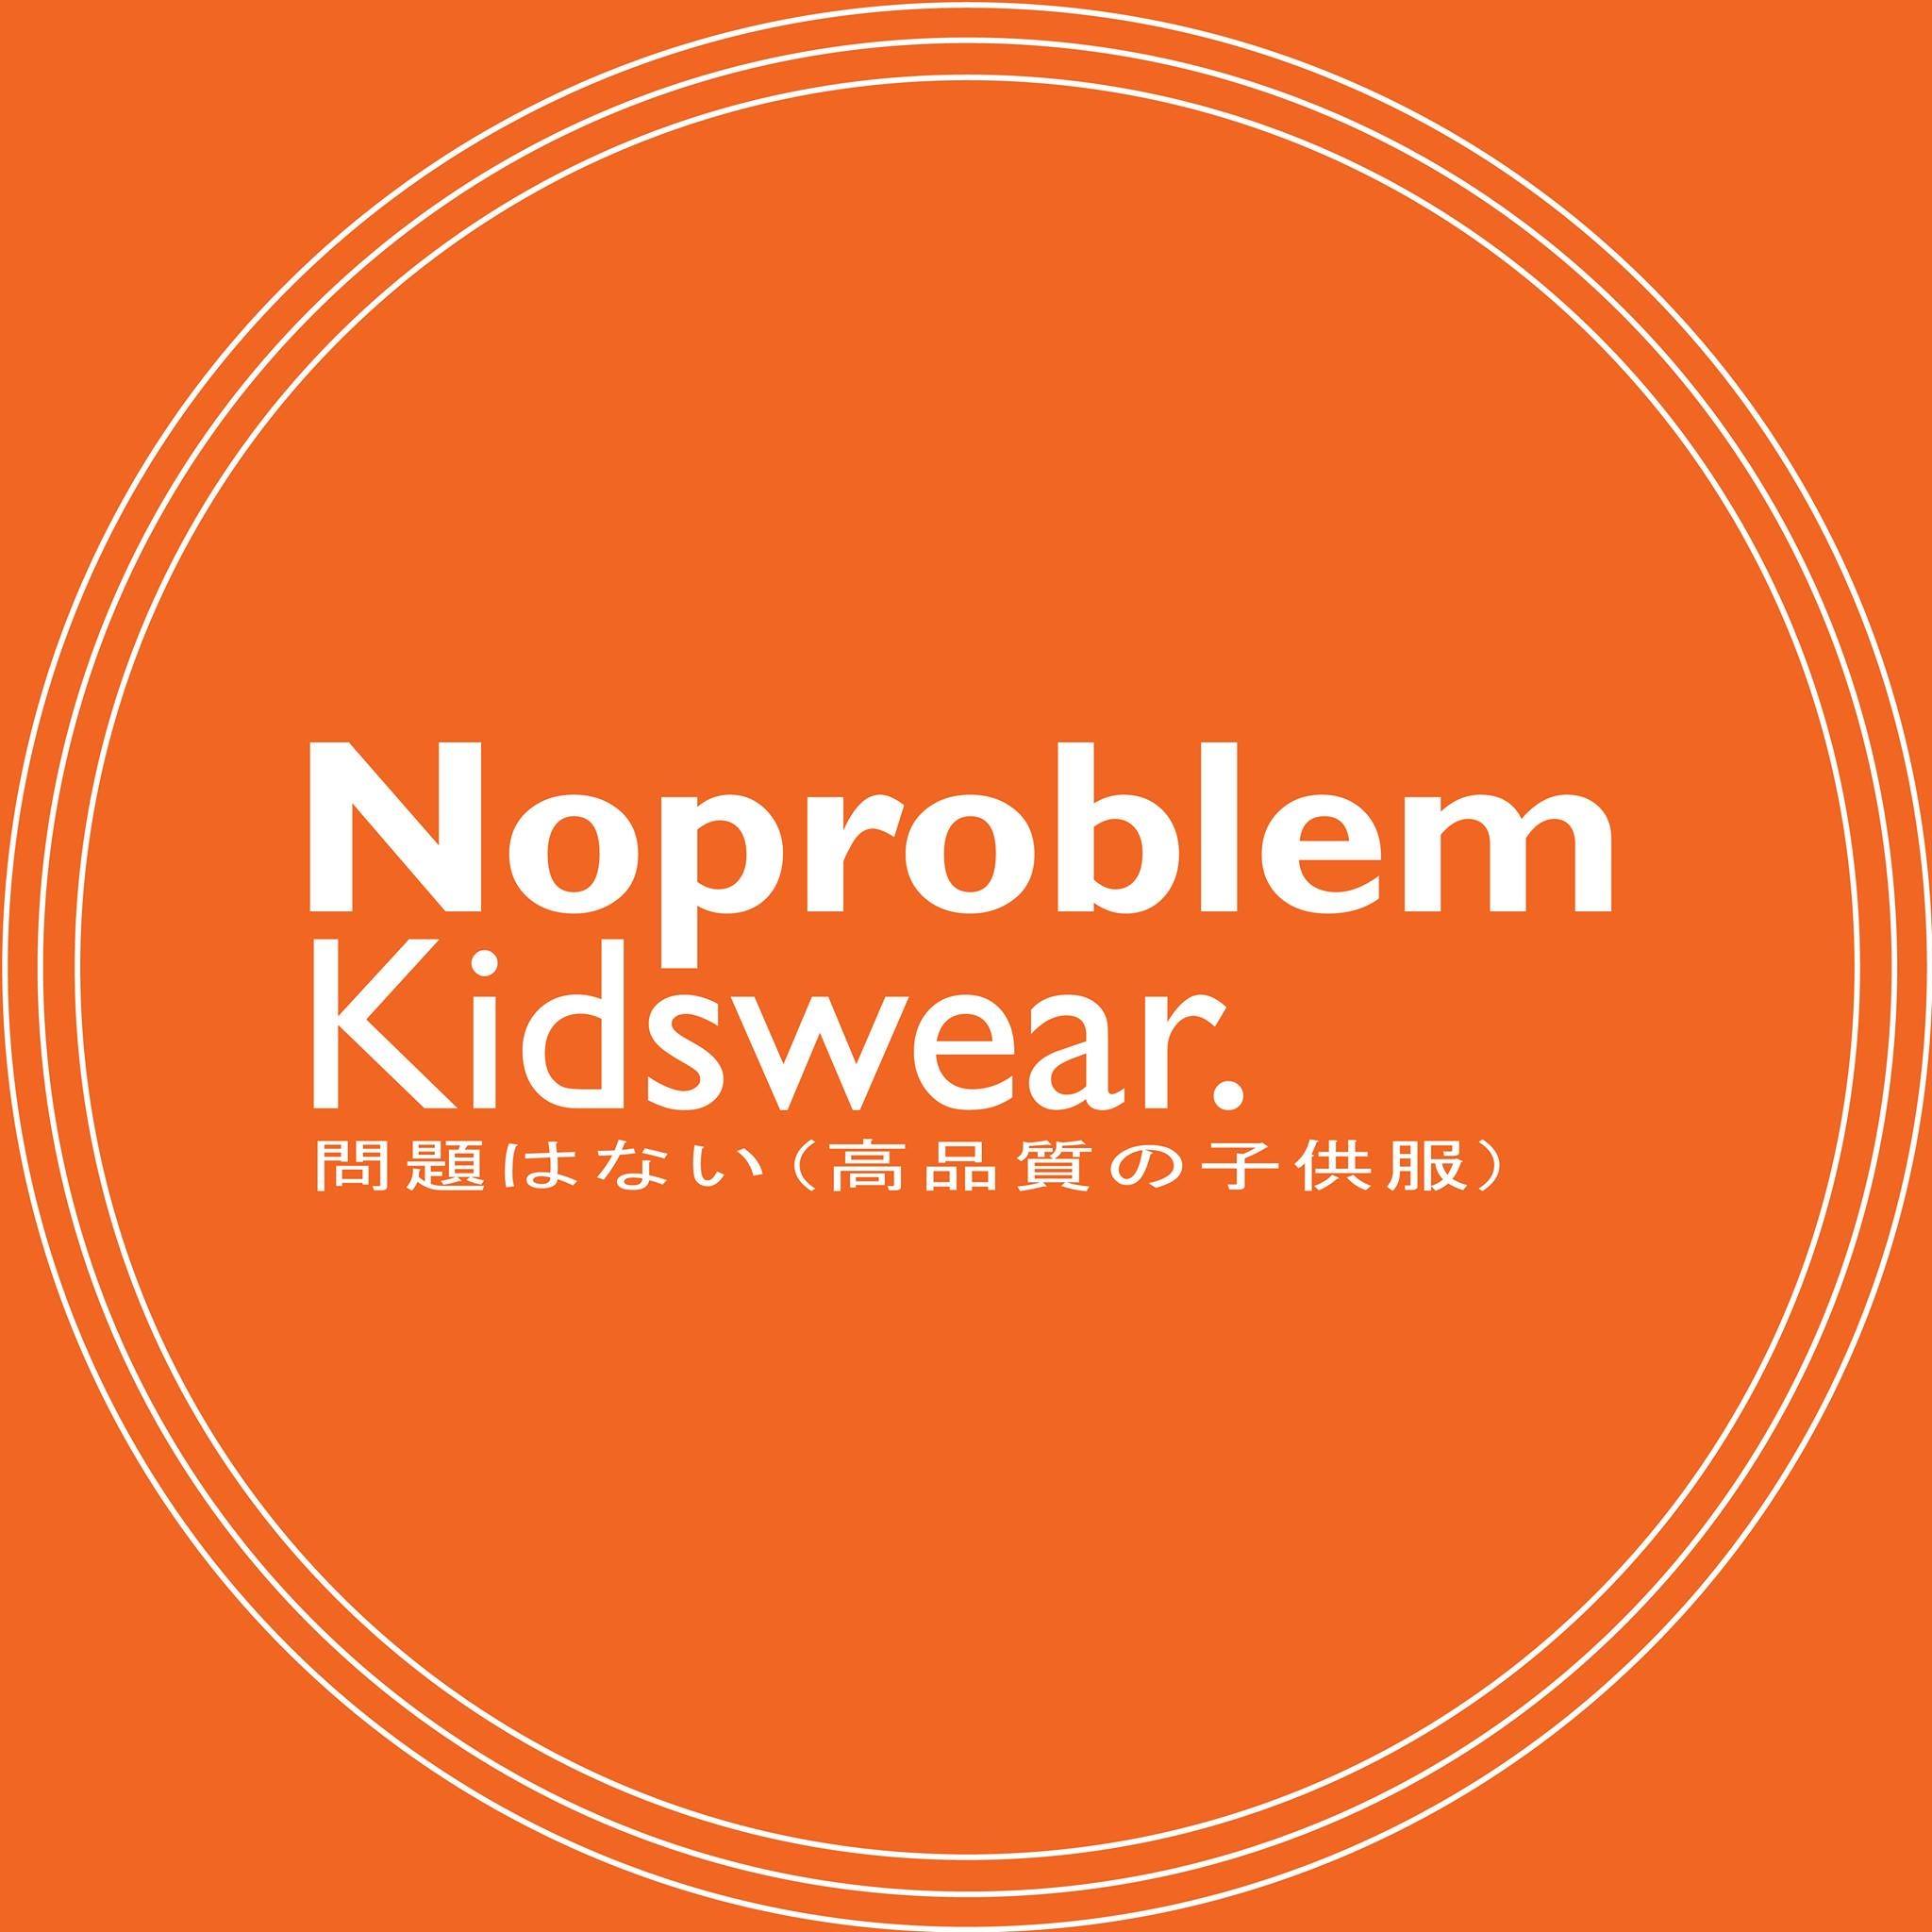 Noproblem Kidswear